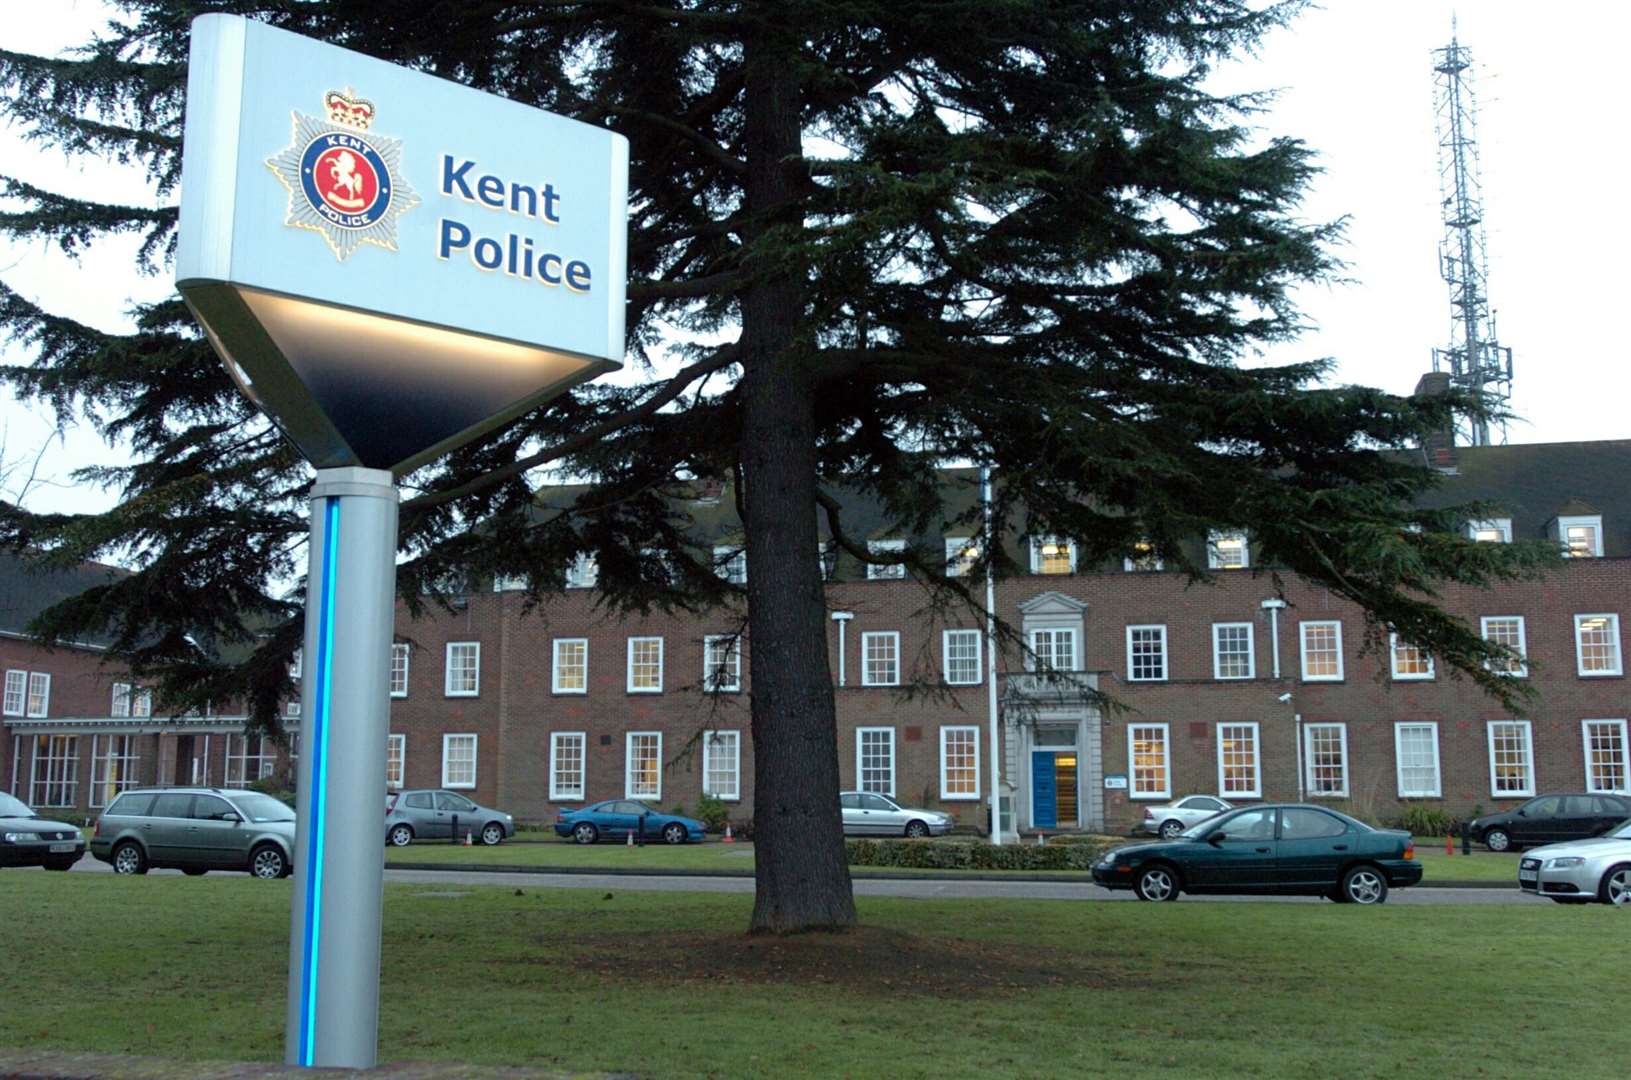 Kent Police Headquarters in Maidstone